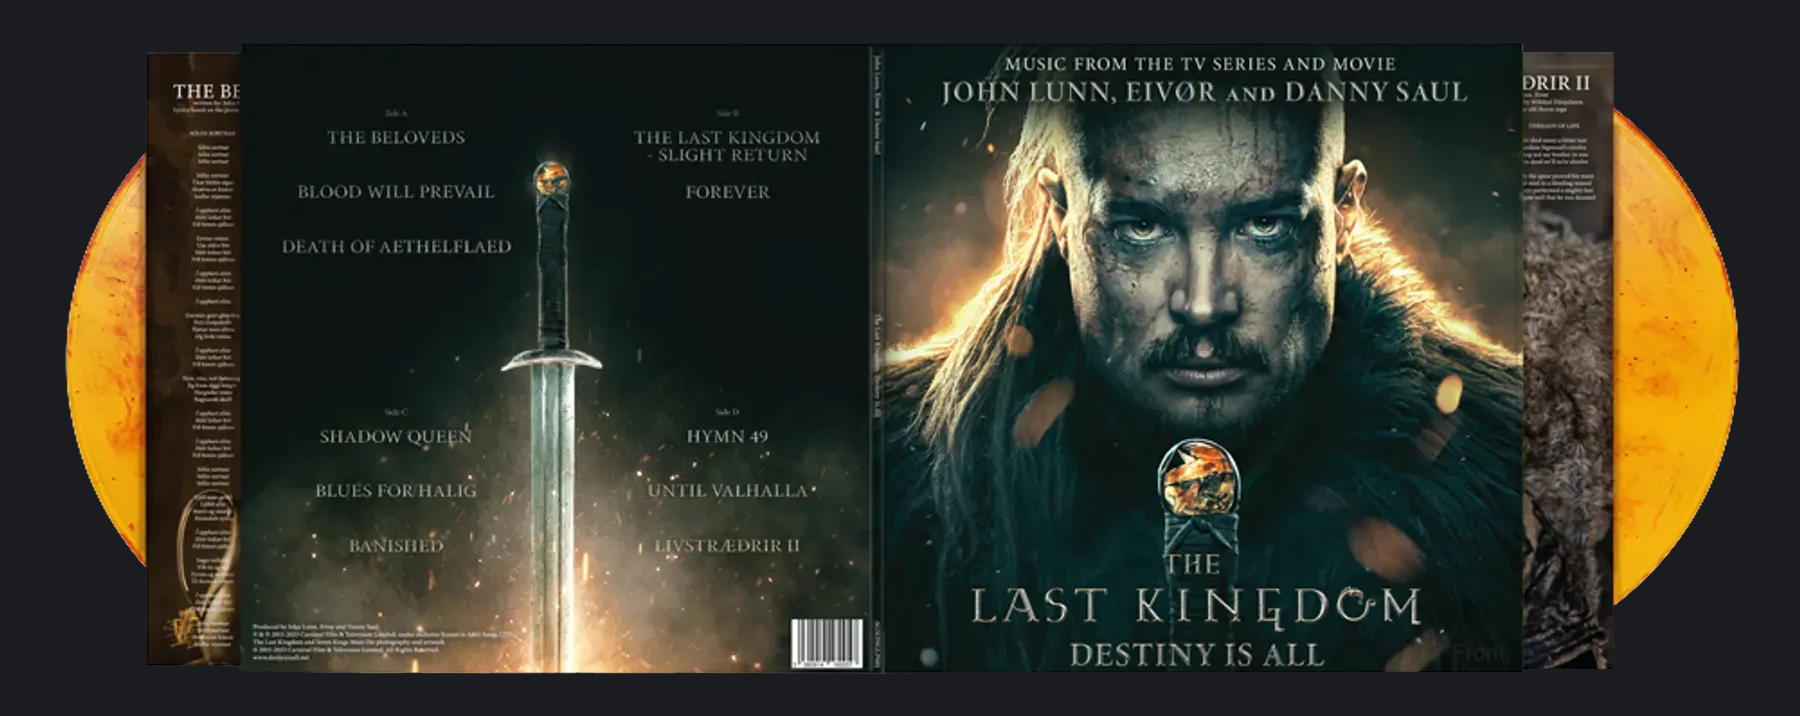 The Last Kingdom: Season 3, Official Trailer [HD]